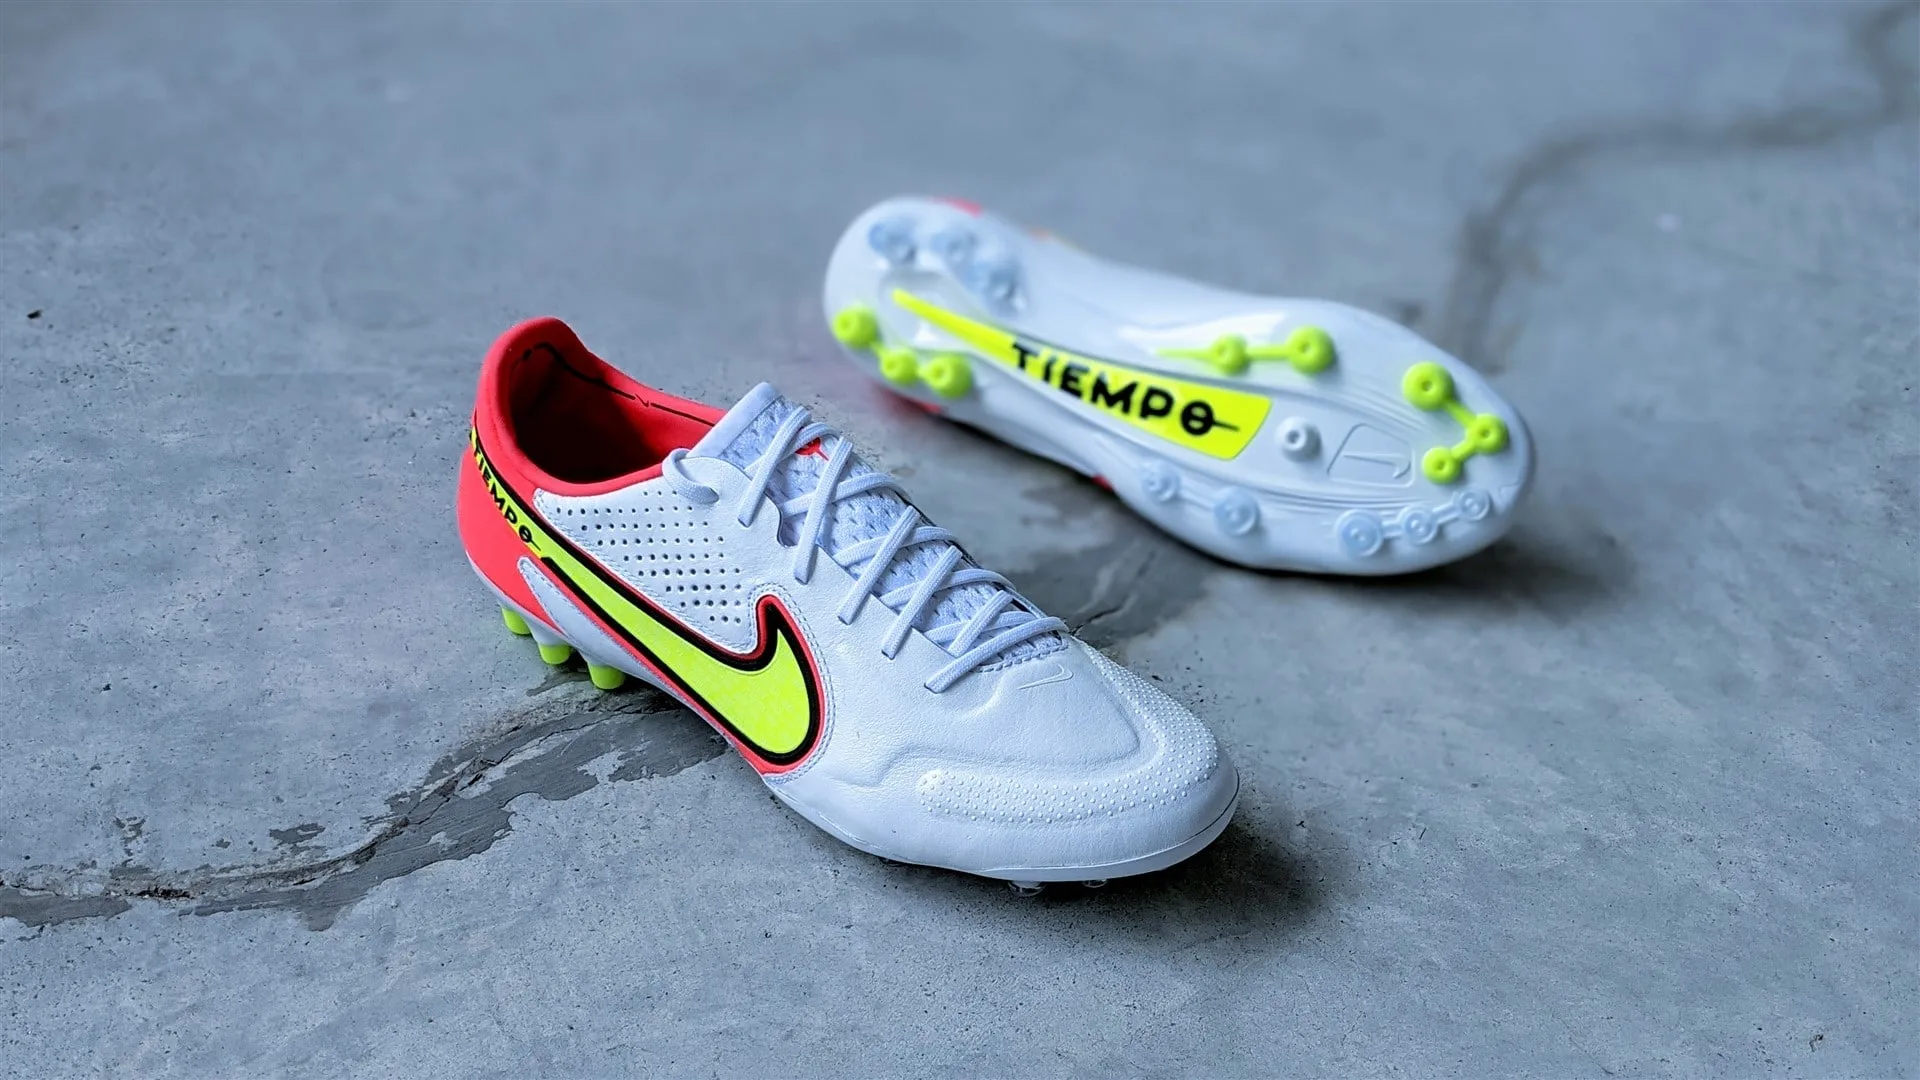 Nike Tiempo Legend 9 Review: The Tiempo Regains Its